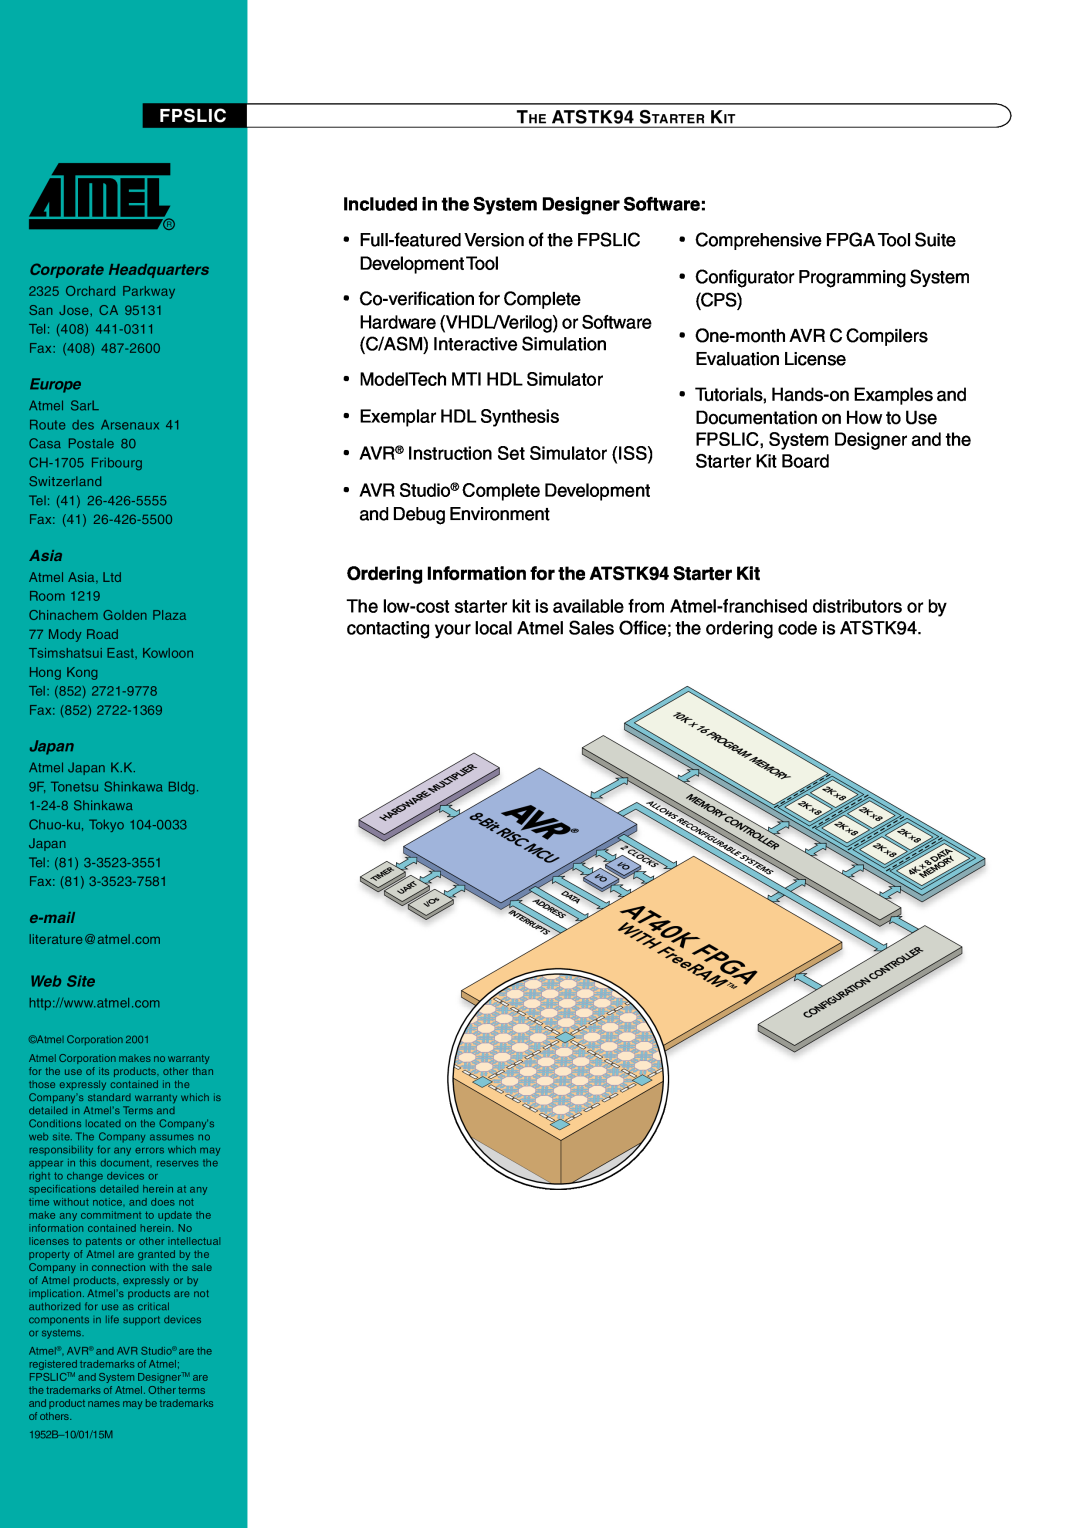 Atmel manual Fpslic, Included in the System Designer Software, Ordering Information for the ATSTK94 Starter Kit 